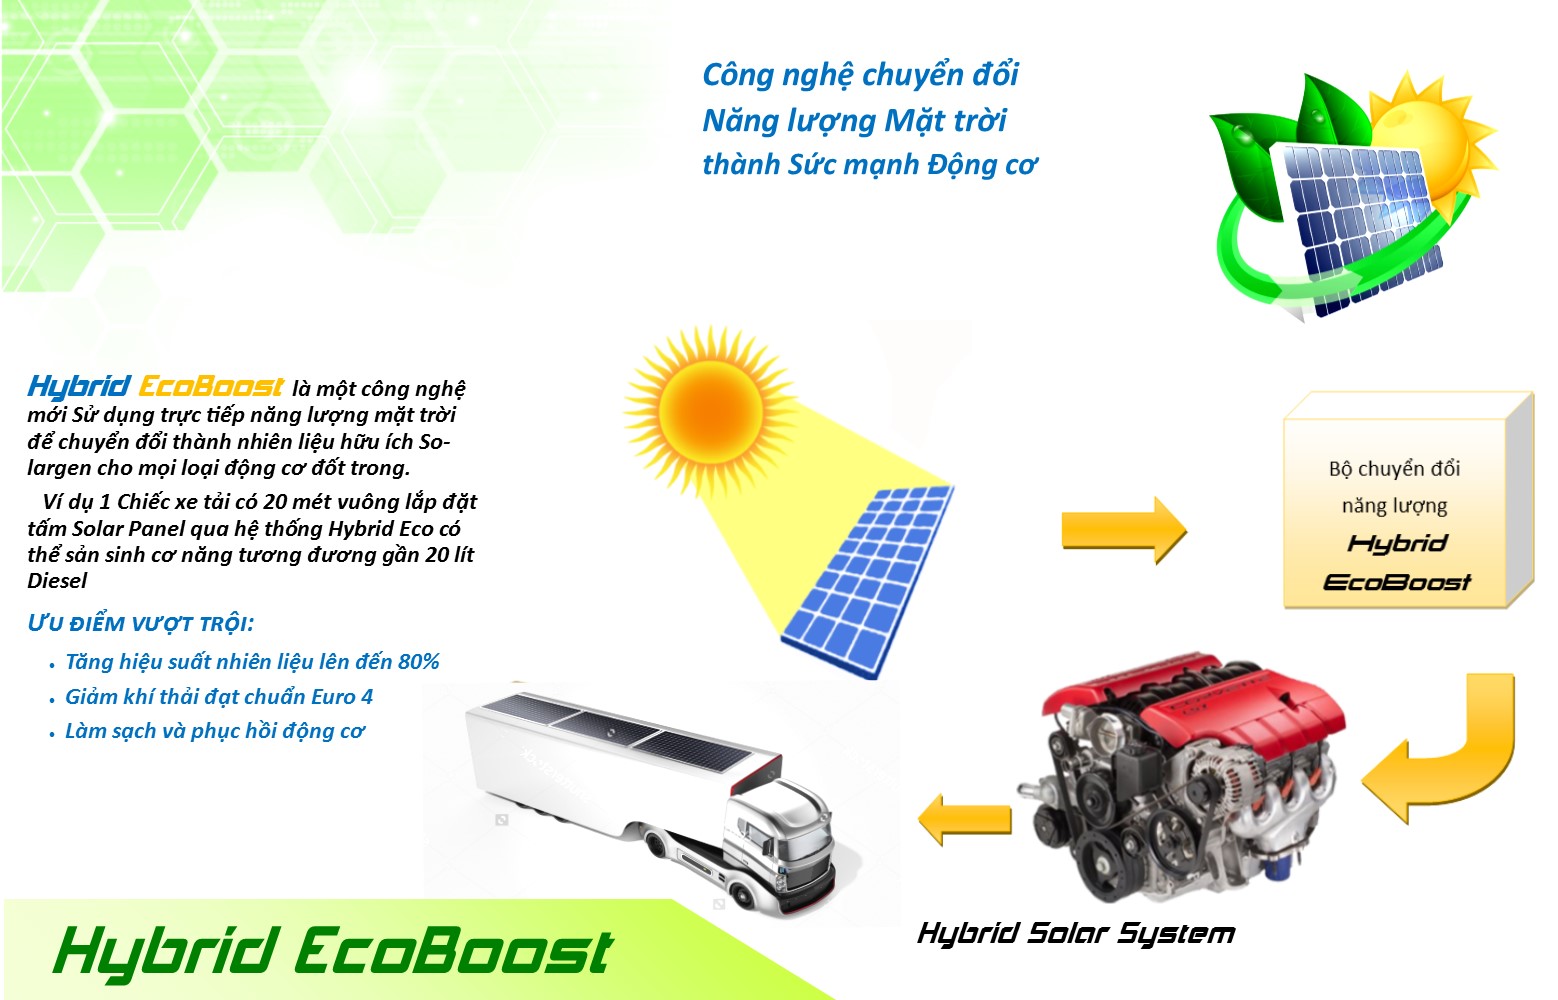 Hybrid EcoBoost